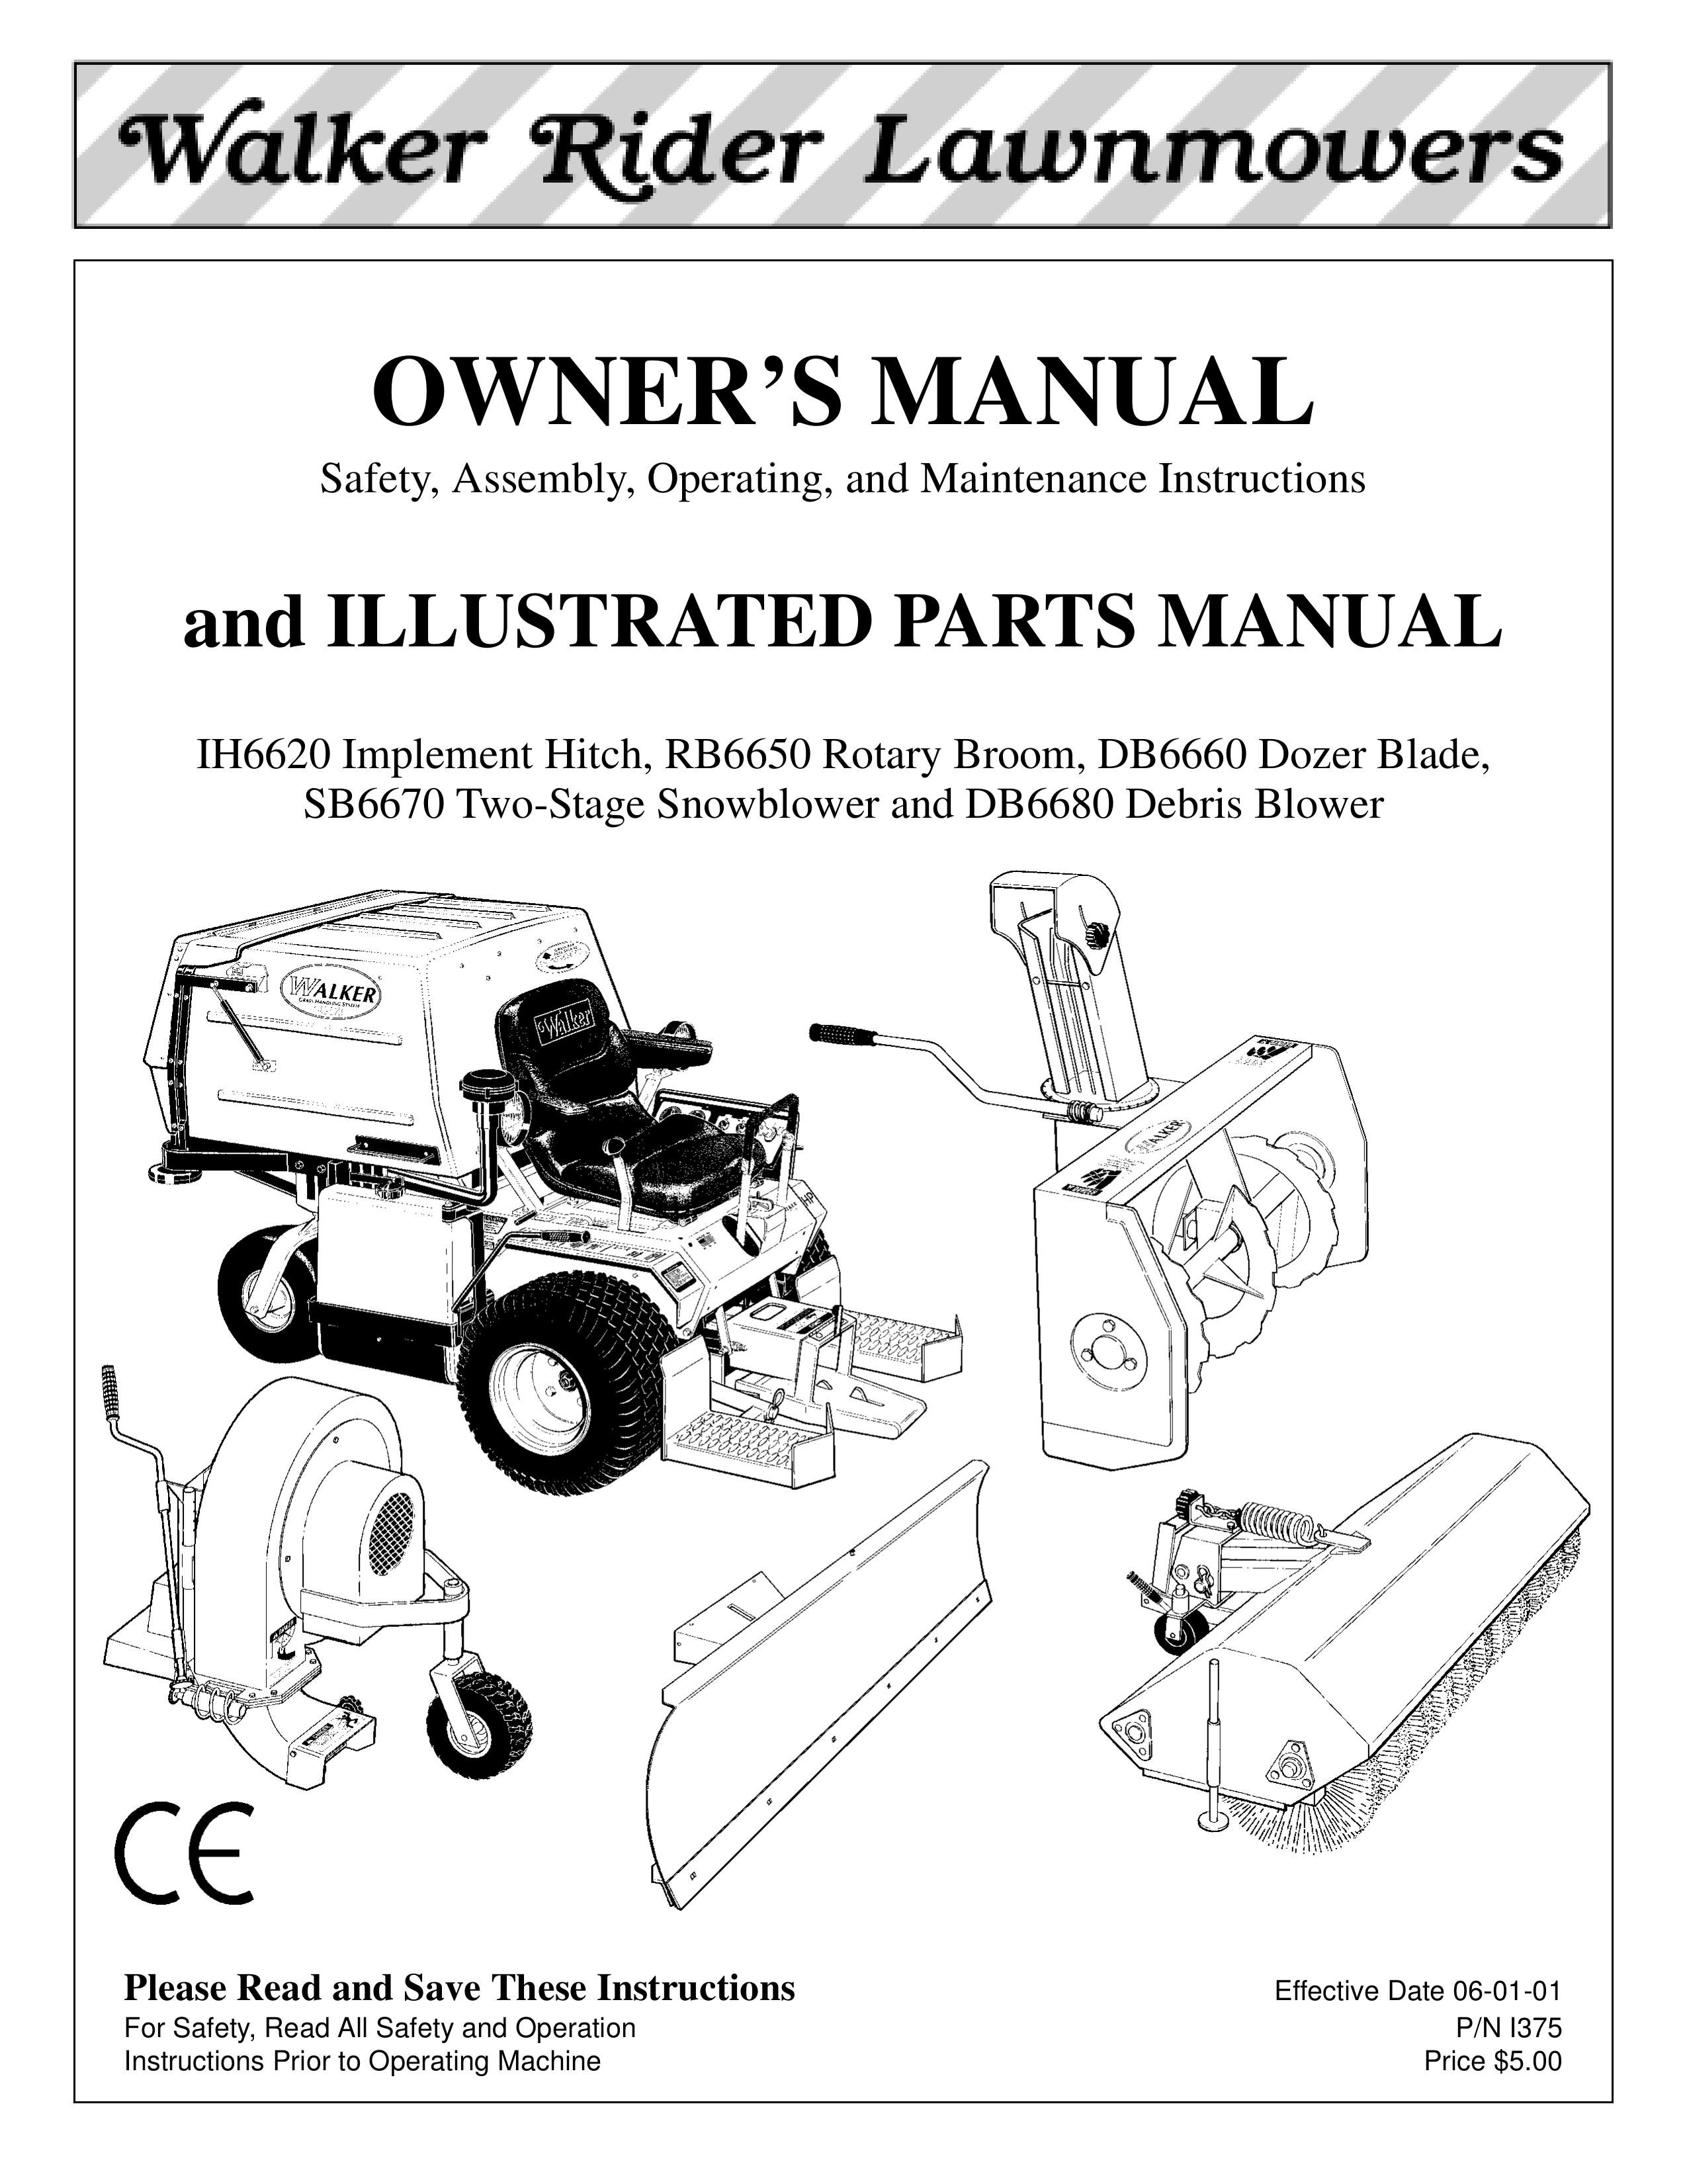 Walker DB6680 Lawn Mower User Manual